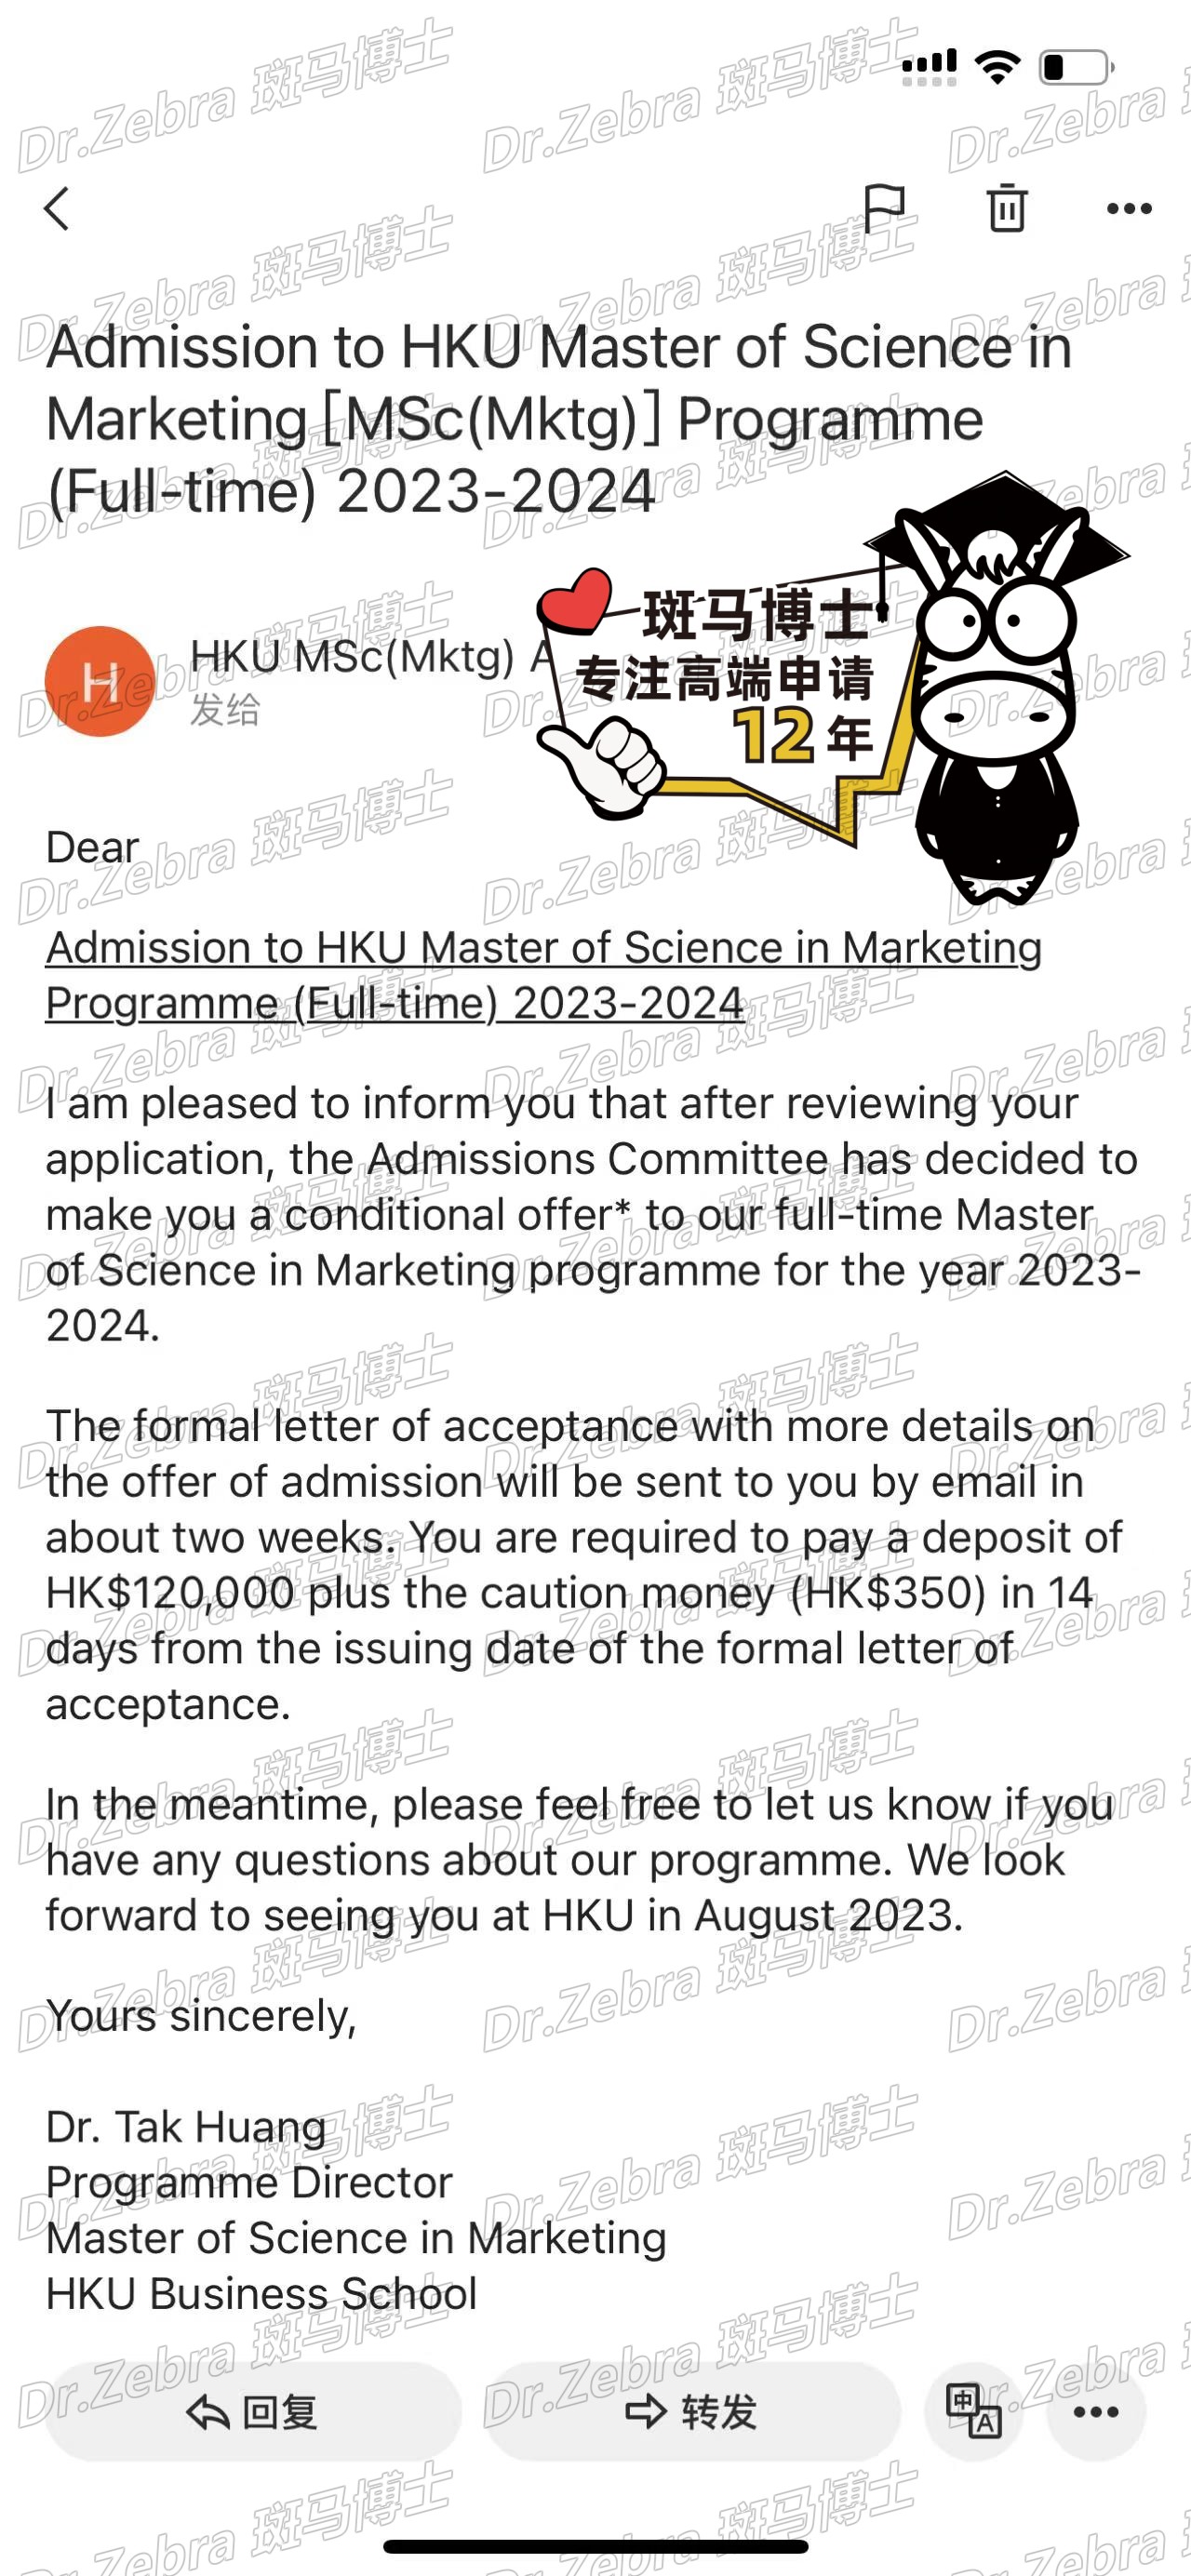 斑马博士、斑马博士留学中心、香港大学、 The University of Hong Kong 、HKU、Master of Science in Marketing、 市场营销硕士